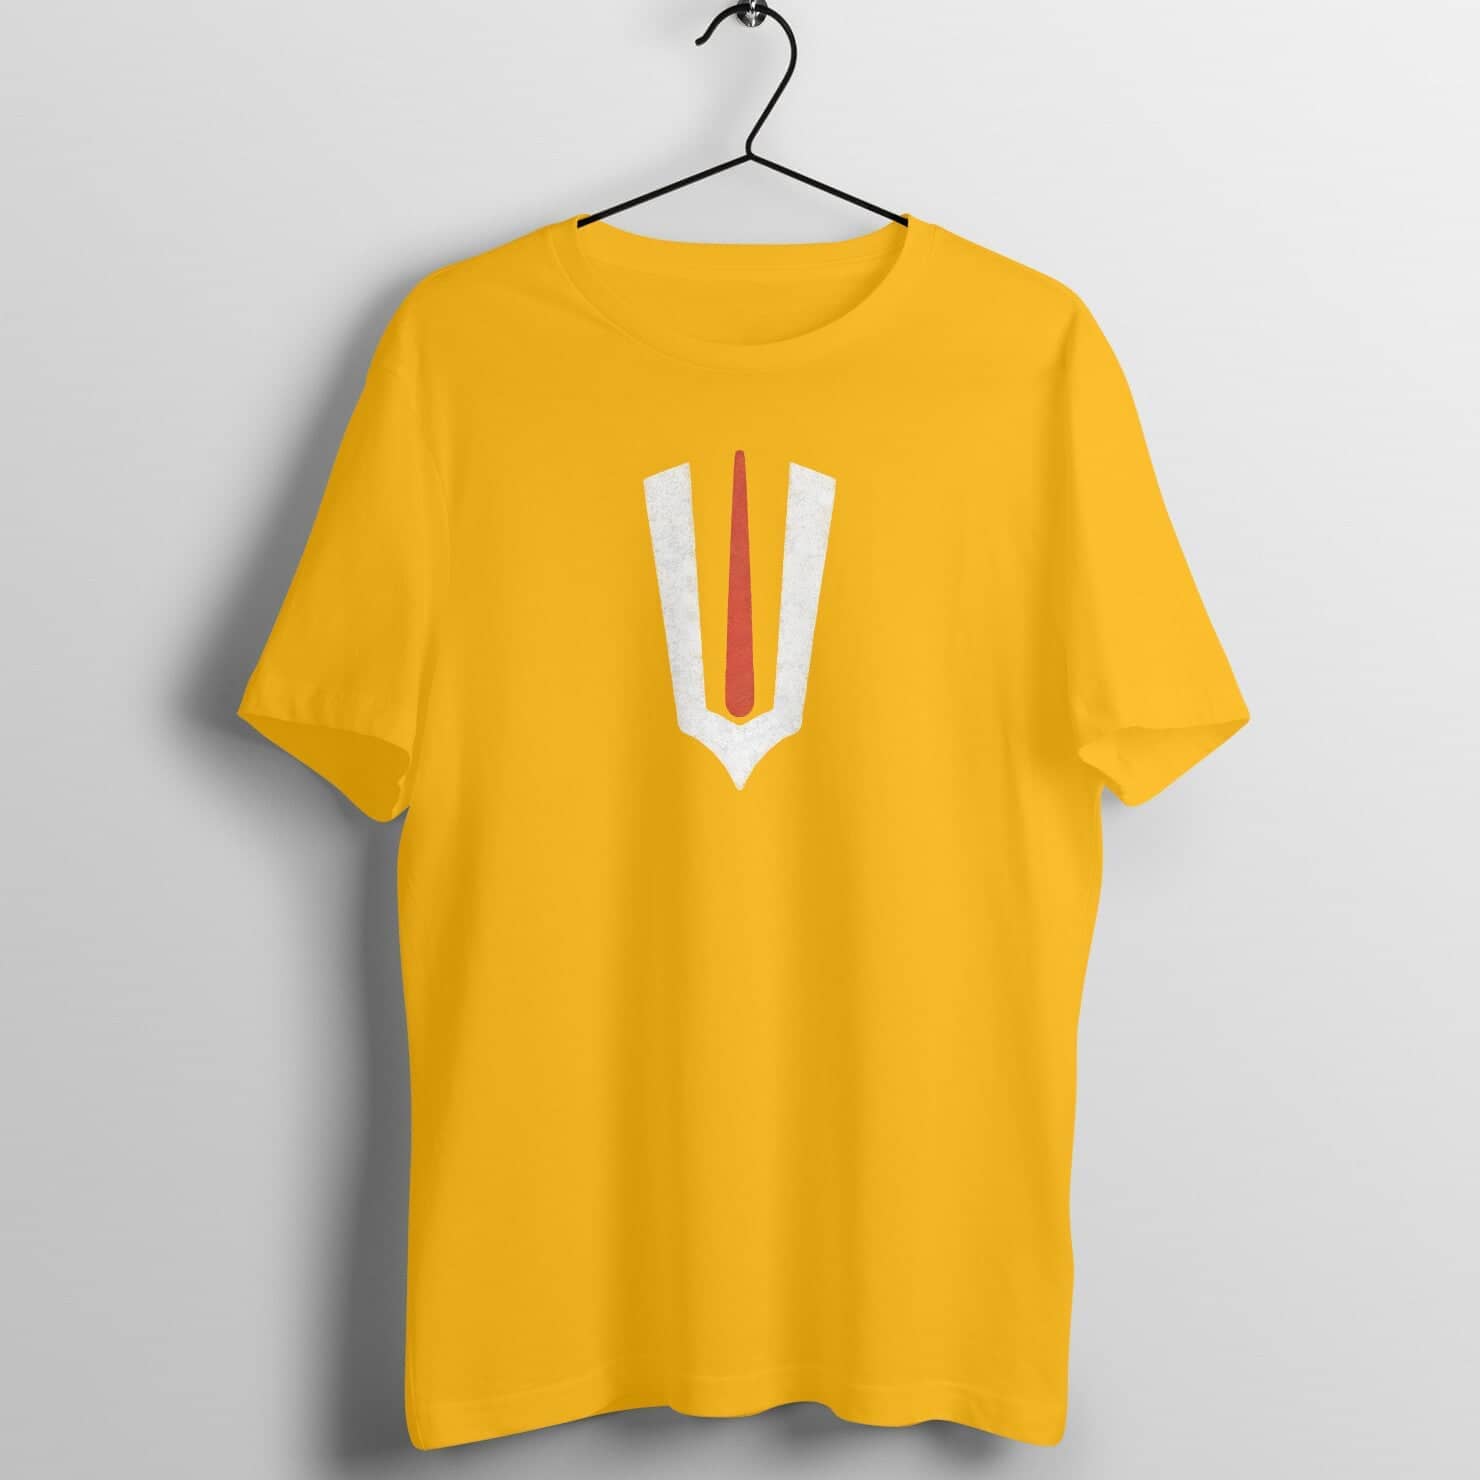 Vishnu Tilak Special Supreme Golden Yellow T Shirt for Men Shirts & Tops Printrove Golden Yellow S 